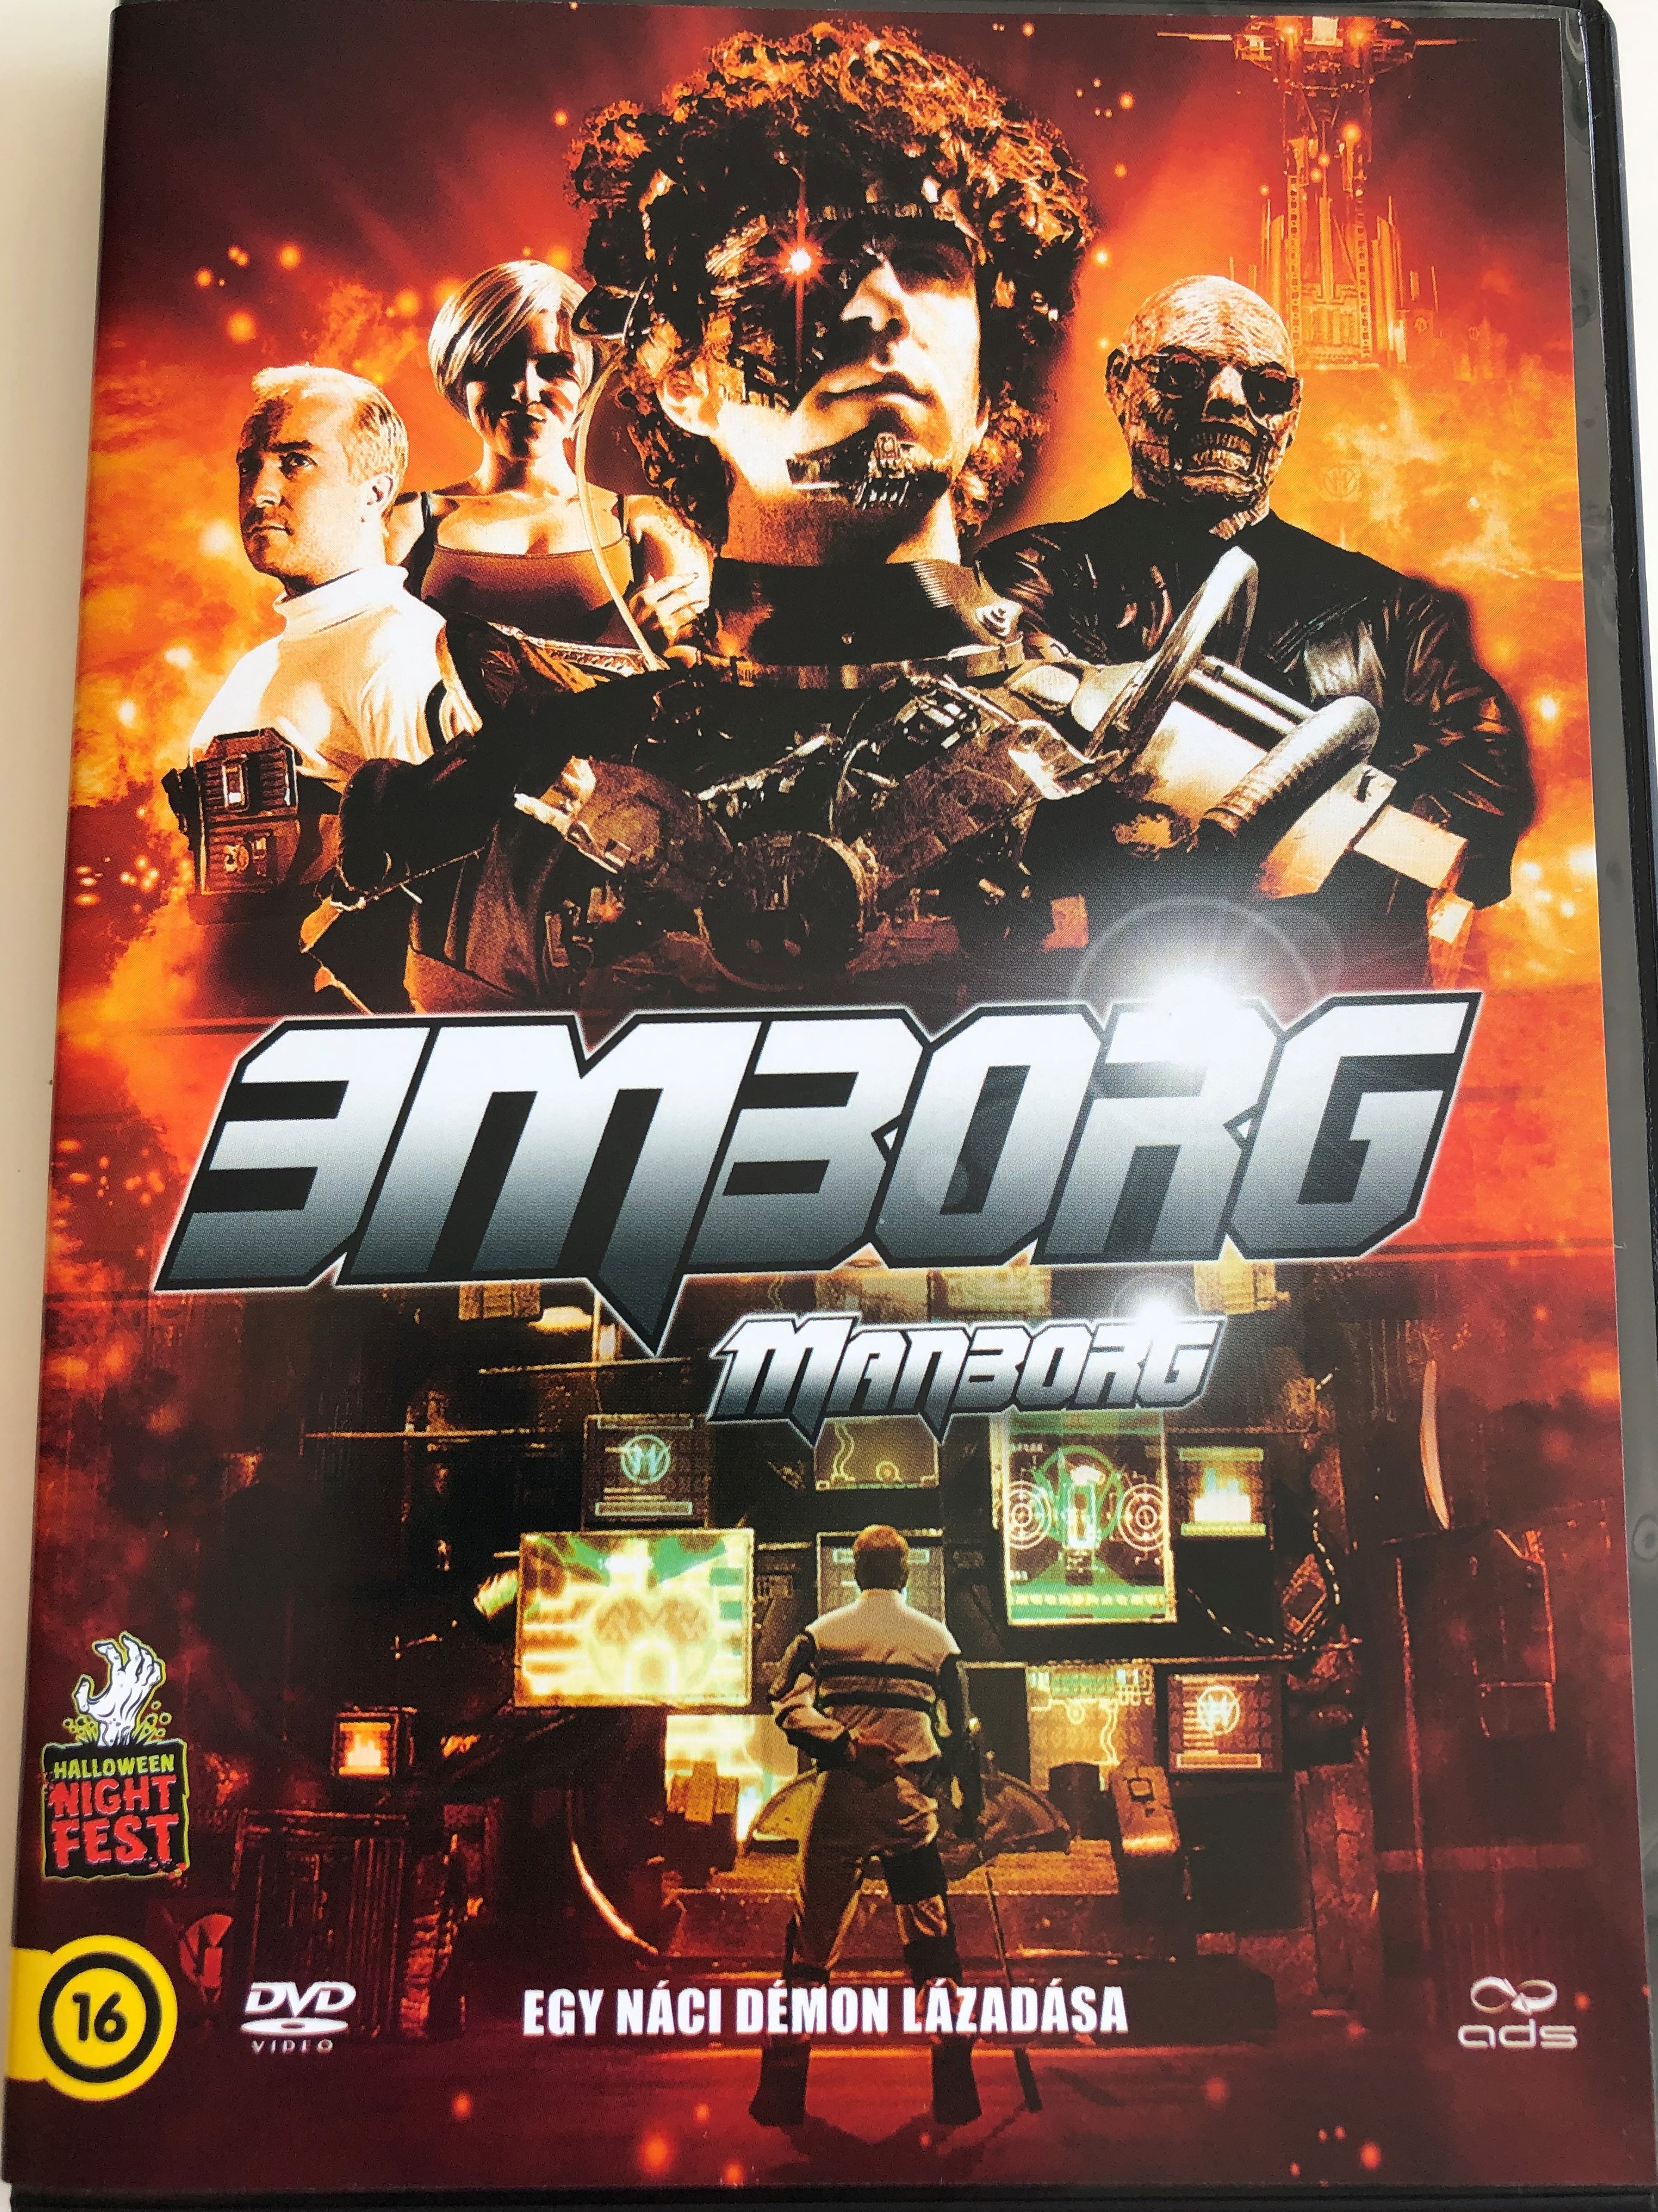 manborg-dvd-2011-emborg-directed-by-steven-kostanski-starring-matthew-kennedy-adam-brooks-meredith-sweeney-conor-sweeney-ludwig-lee-1-.jpg